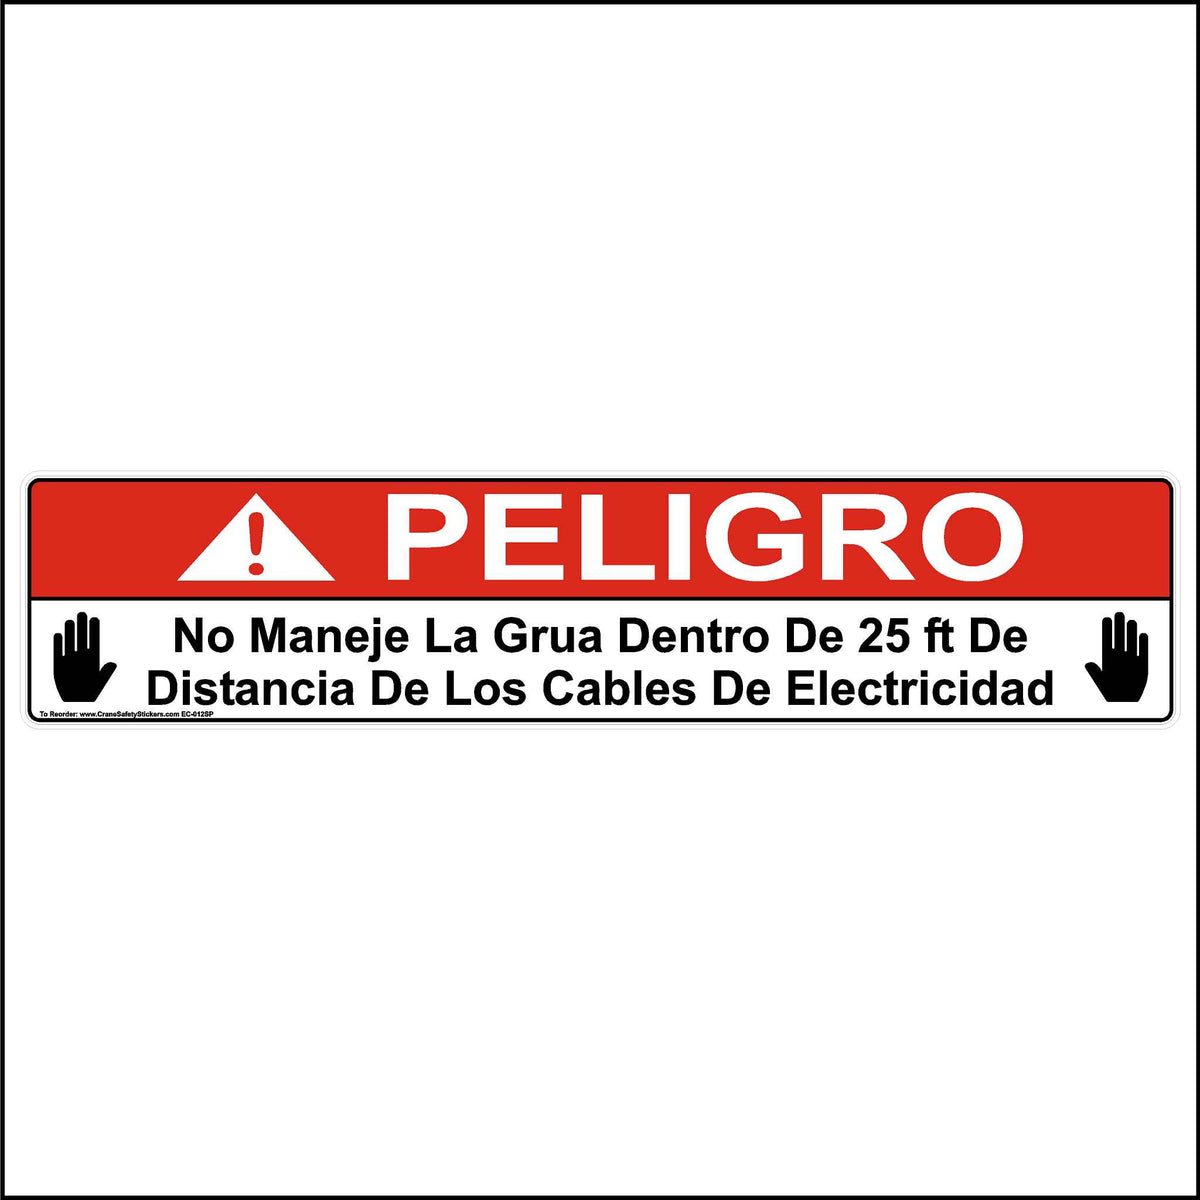 Spanish Power Line Clearance Sticker Printed With. No Maneje La Grua Dentro De 25 ft De Distancia De Los Cables De Electricidad.  &quot;Do Not Operate Crane Within 25 Feet of Electrical Cables Sticker.&quot;